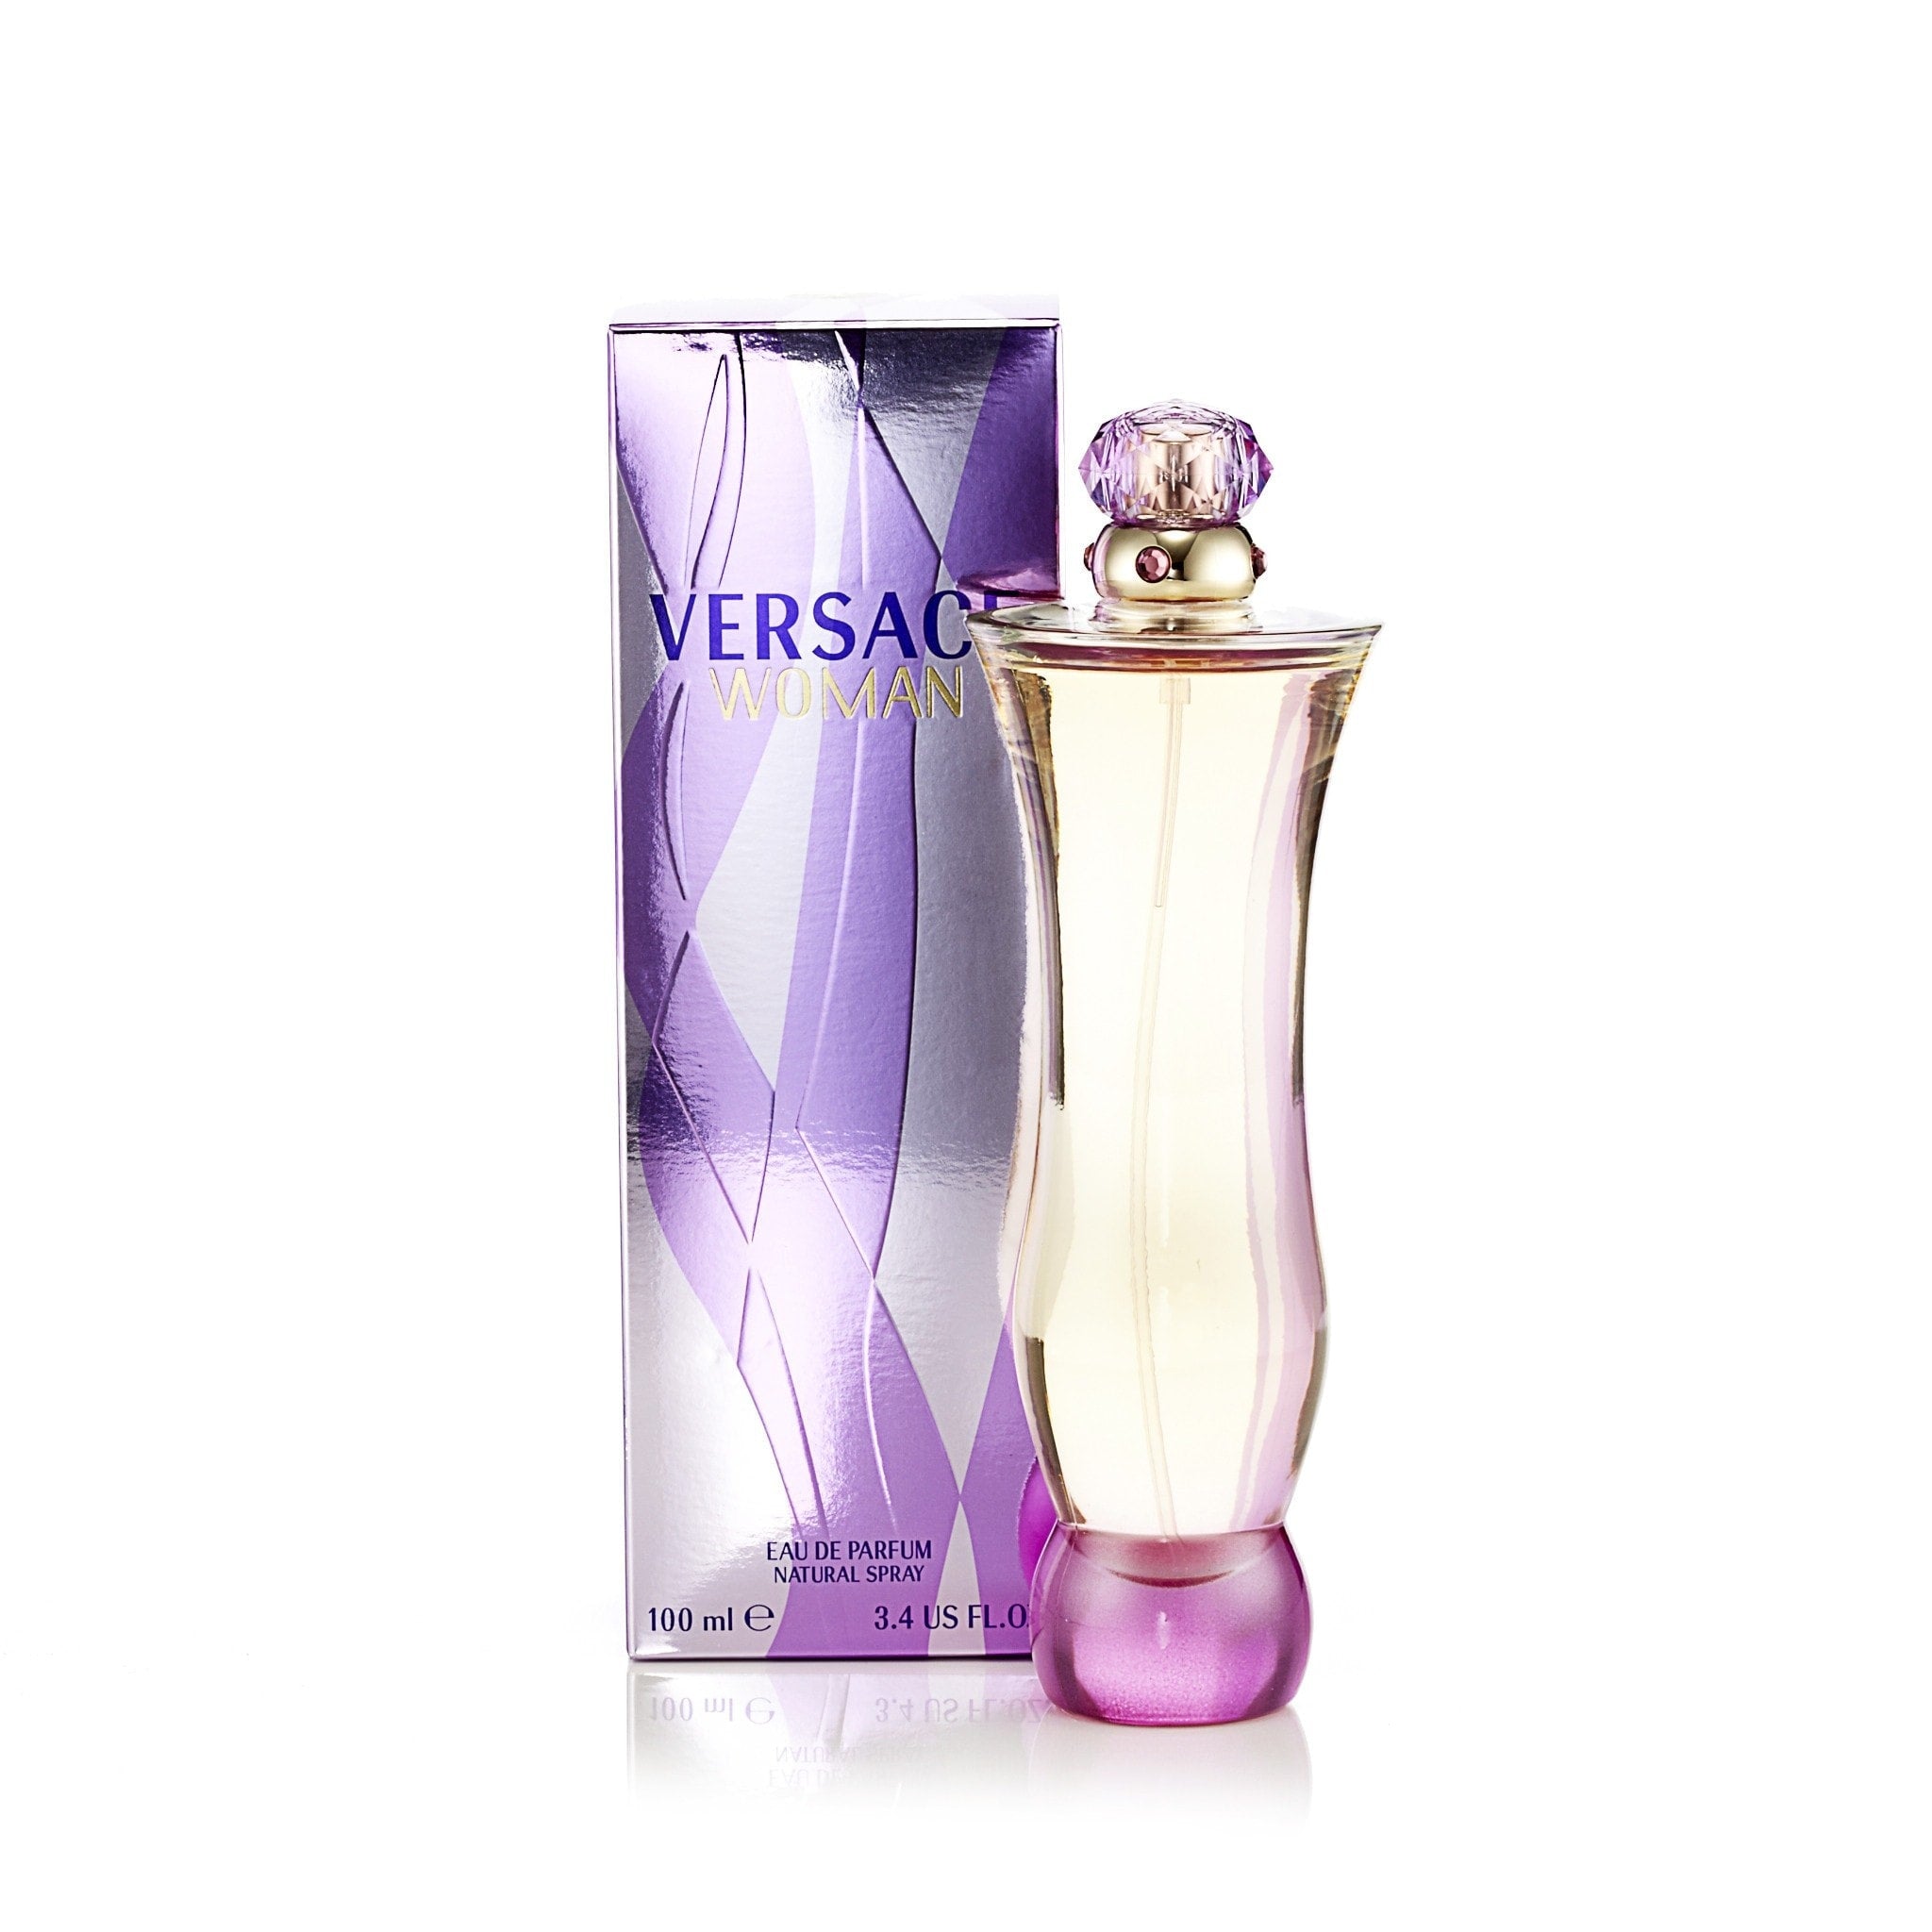 Versace Woman Eau de Parfum Spray for Women by Versace Secondary image